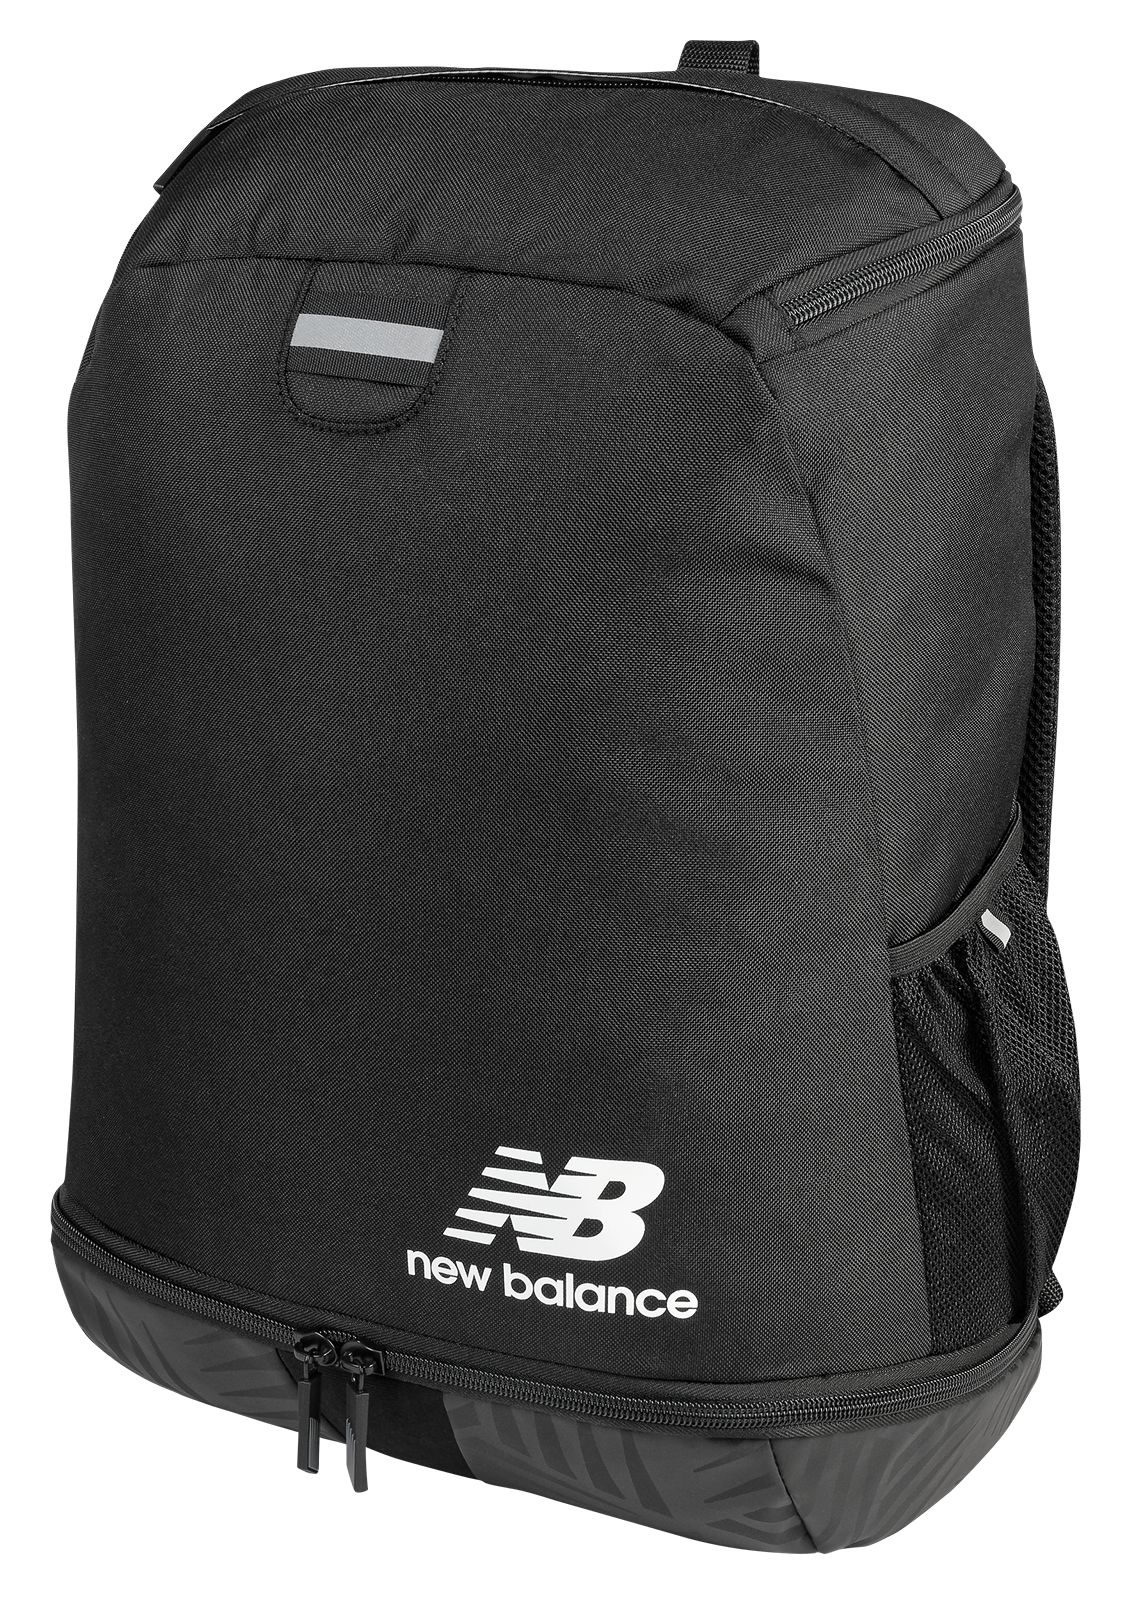 new balance baseball backpack